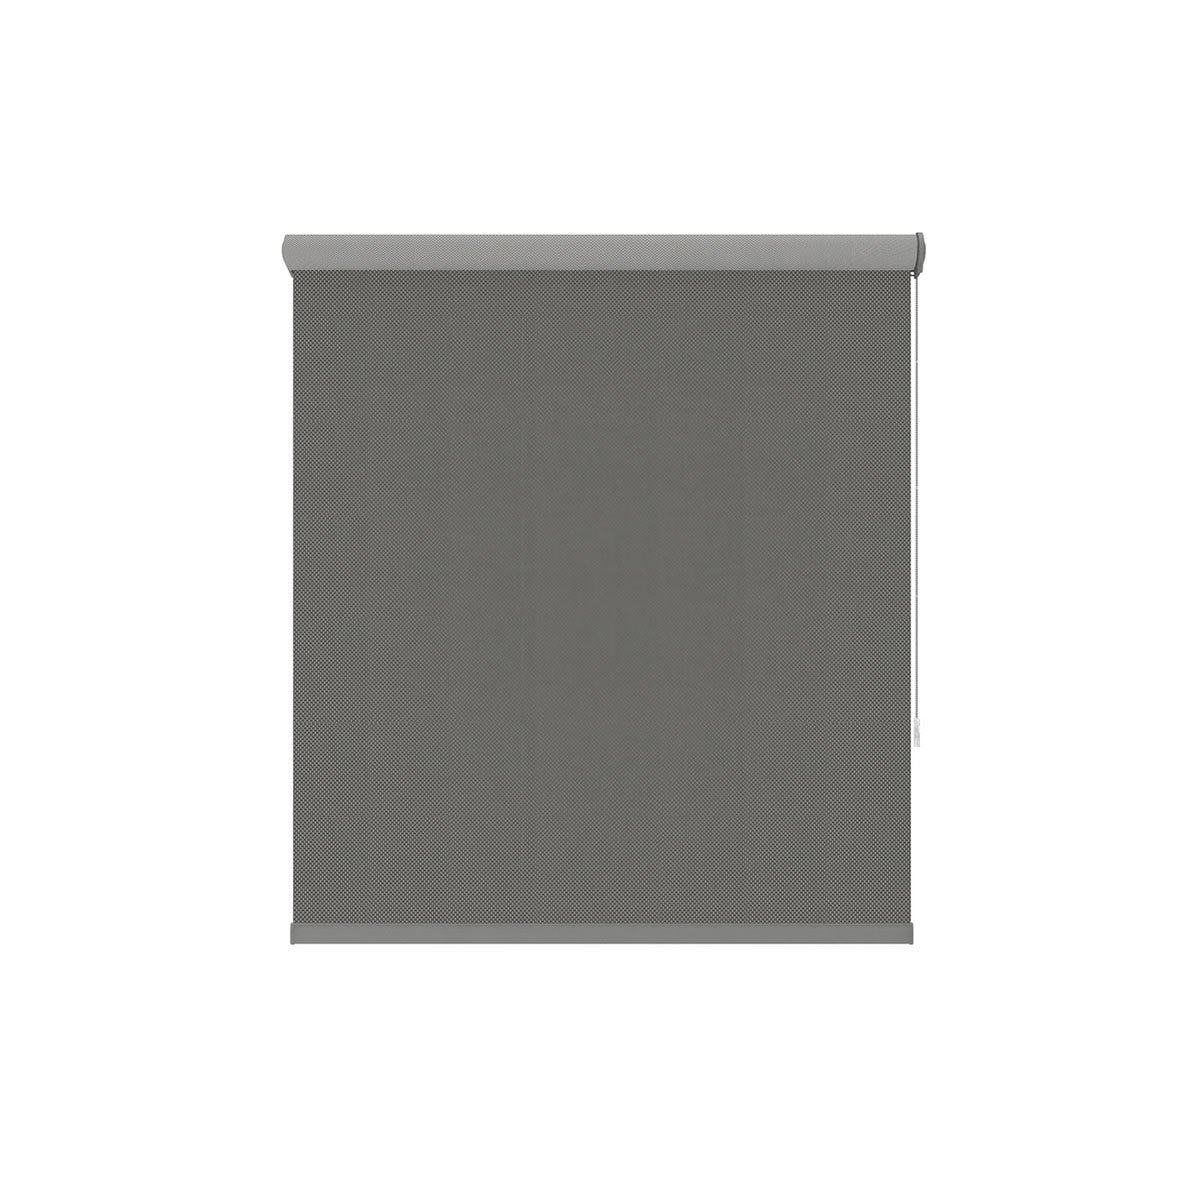 Persiana Enrollable Translucida Screen Phifer 4500 New 1.00 X 2.40 Blanco Classic